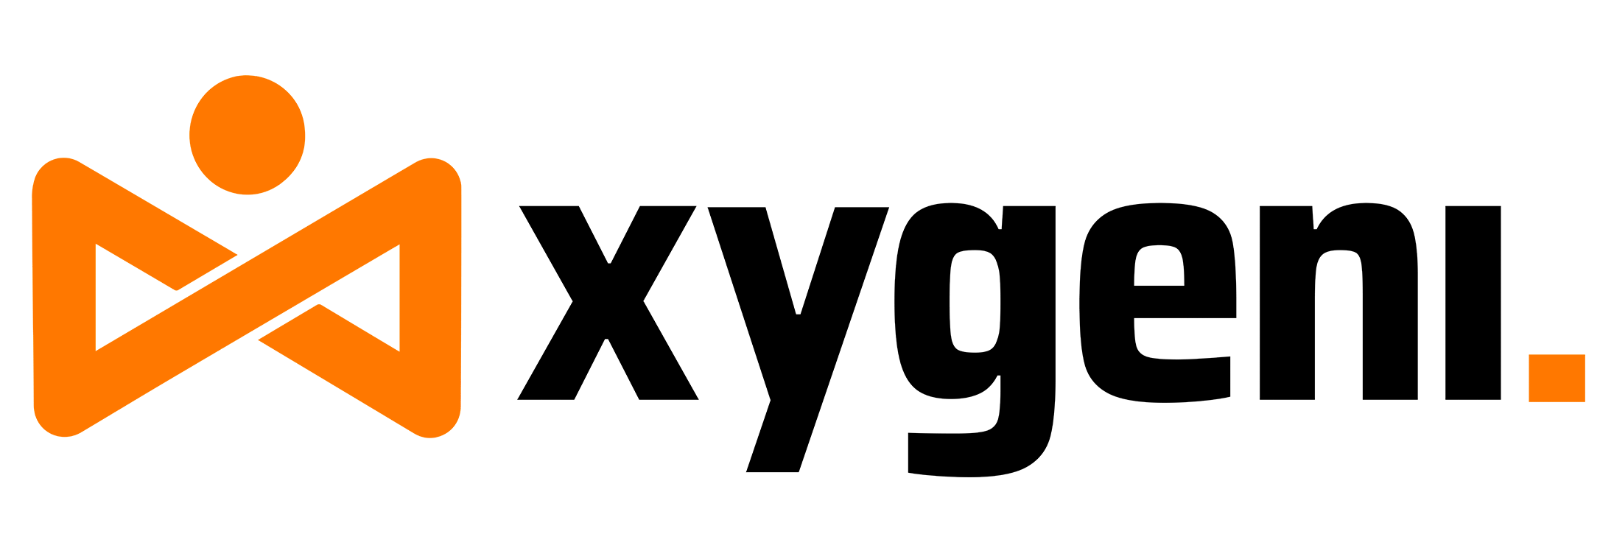 Xygeni_Logo_New_Black